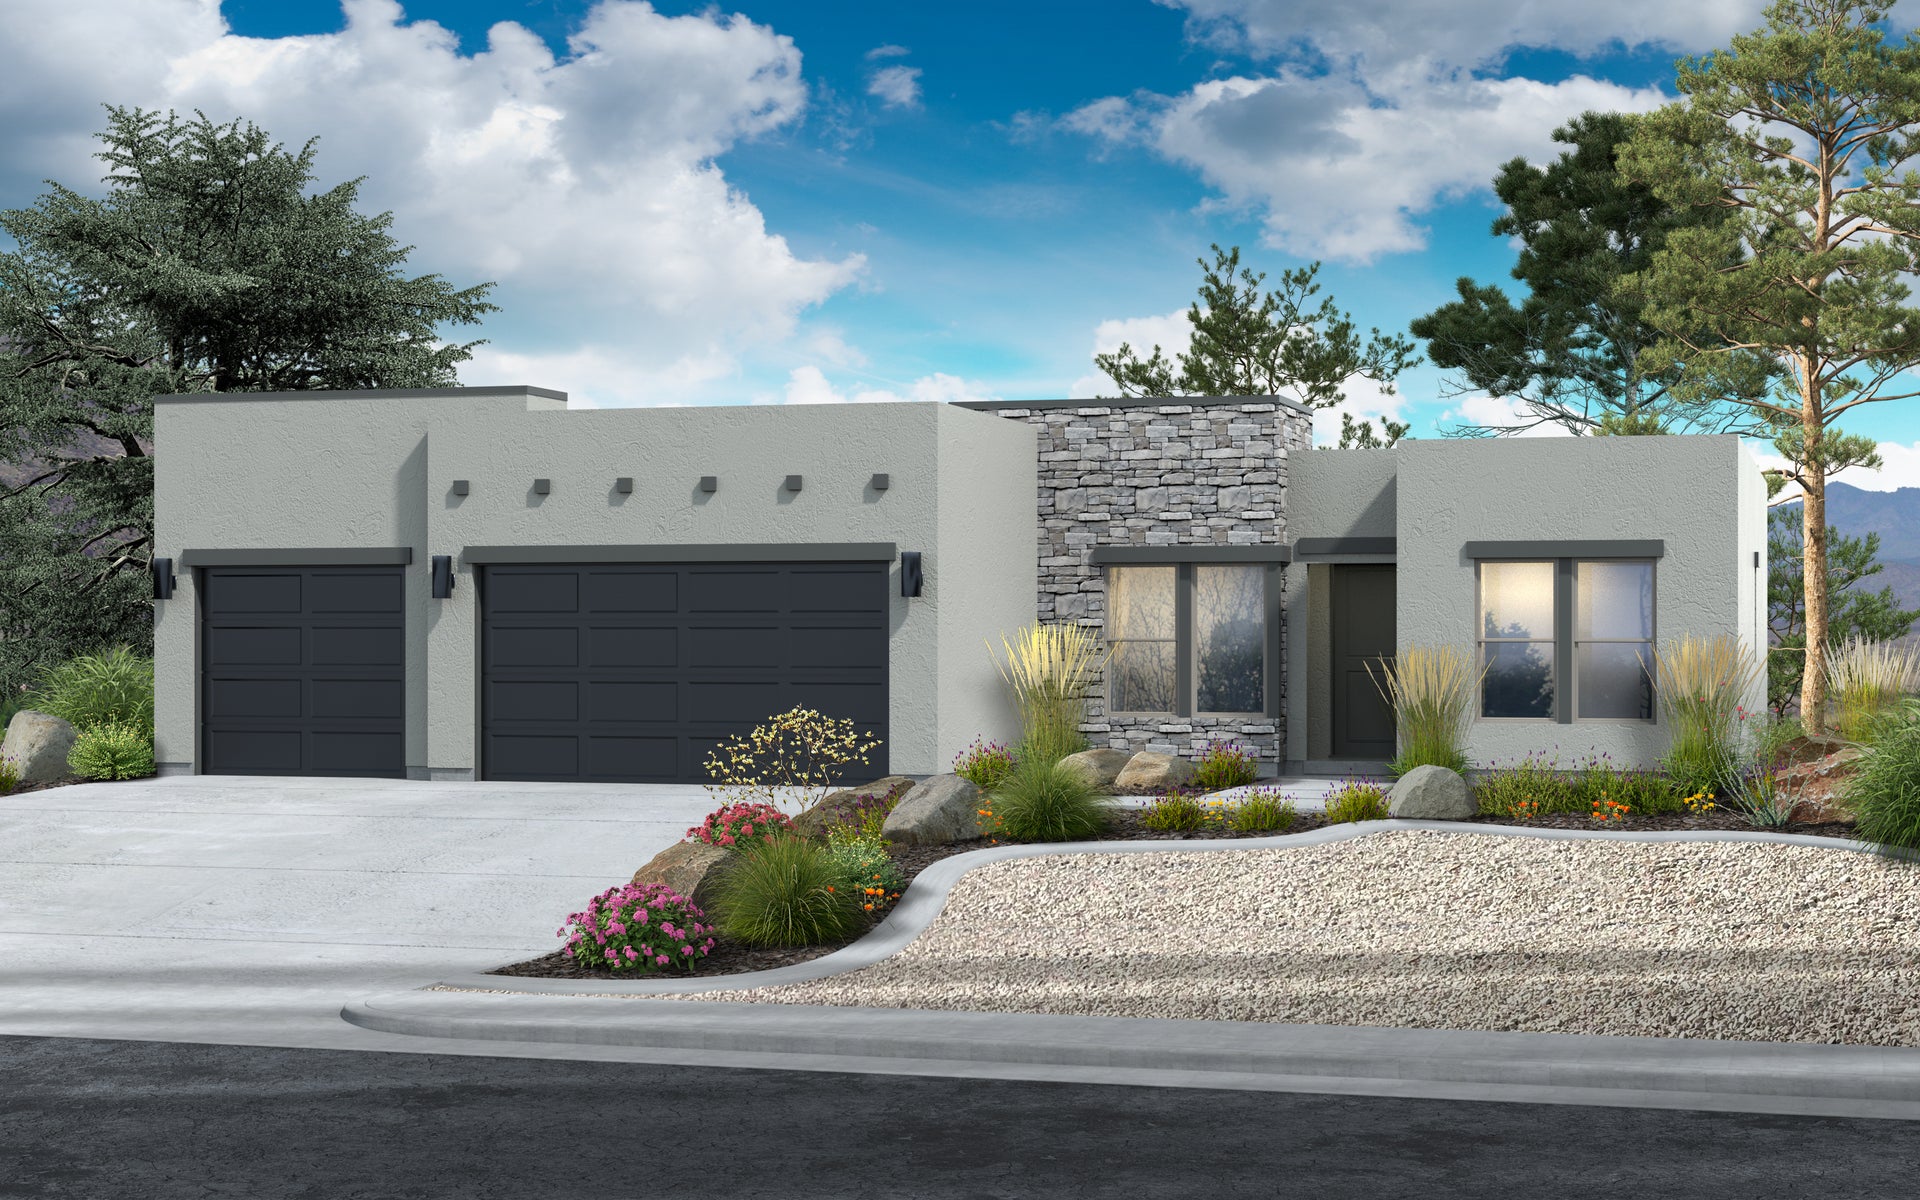 The Mirage Desert Contemporary new home floorplan in Utah